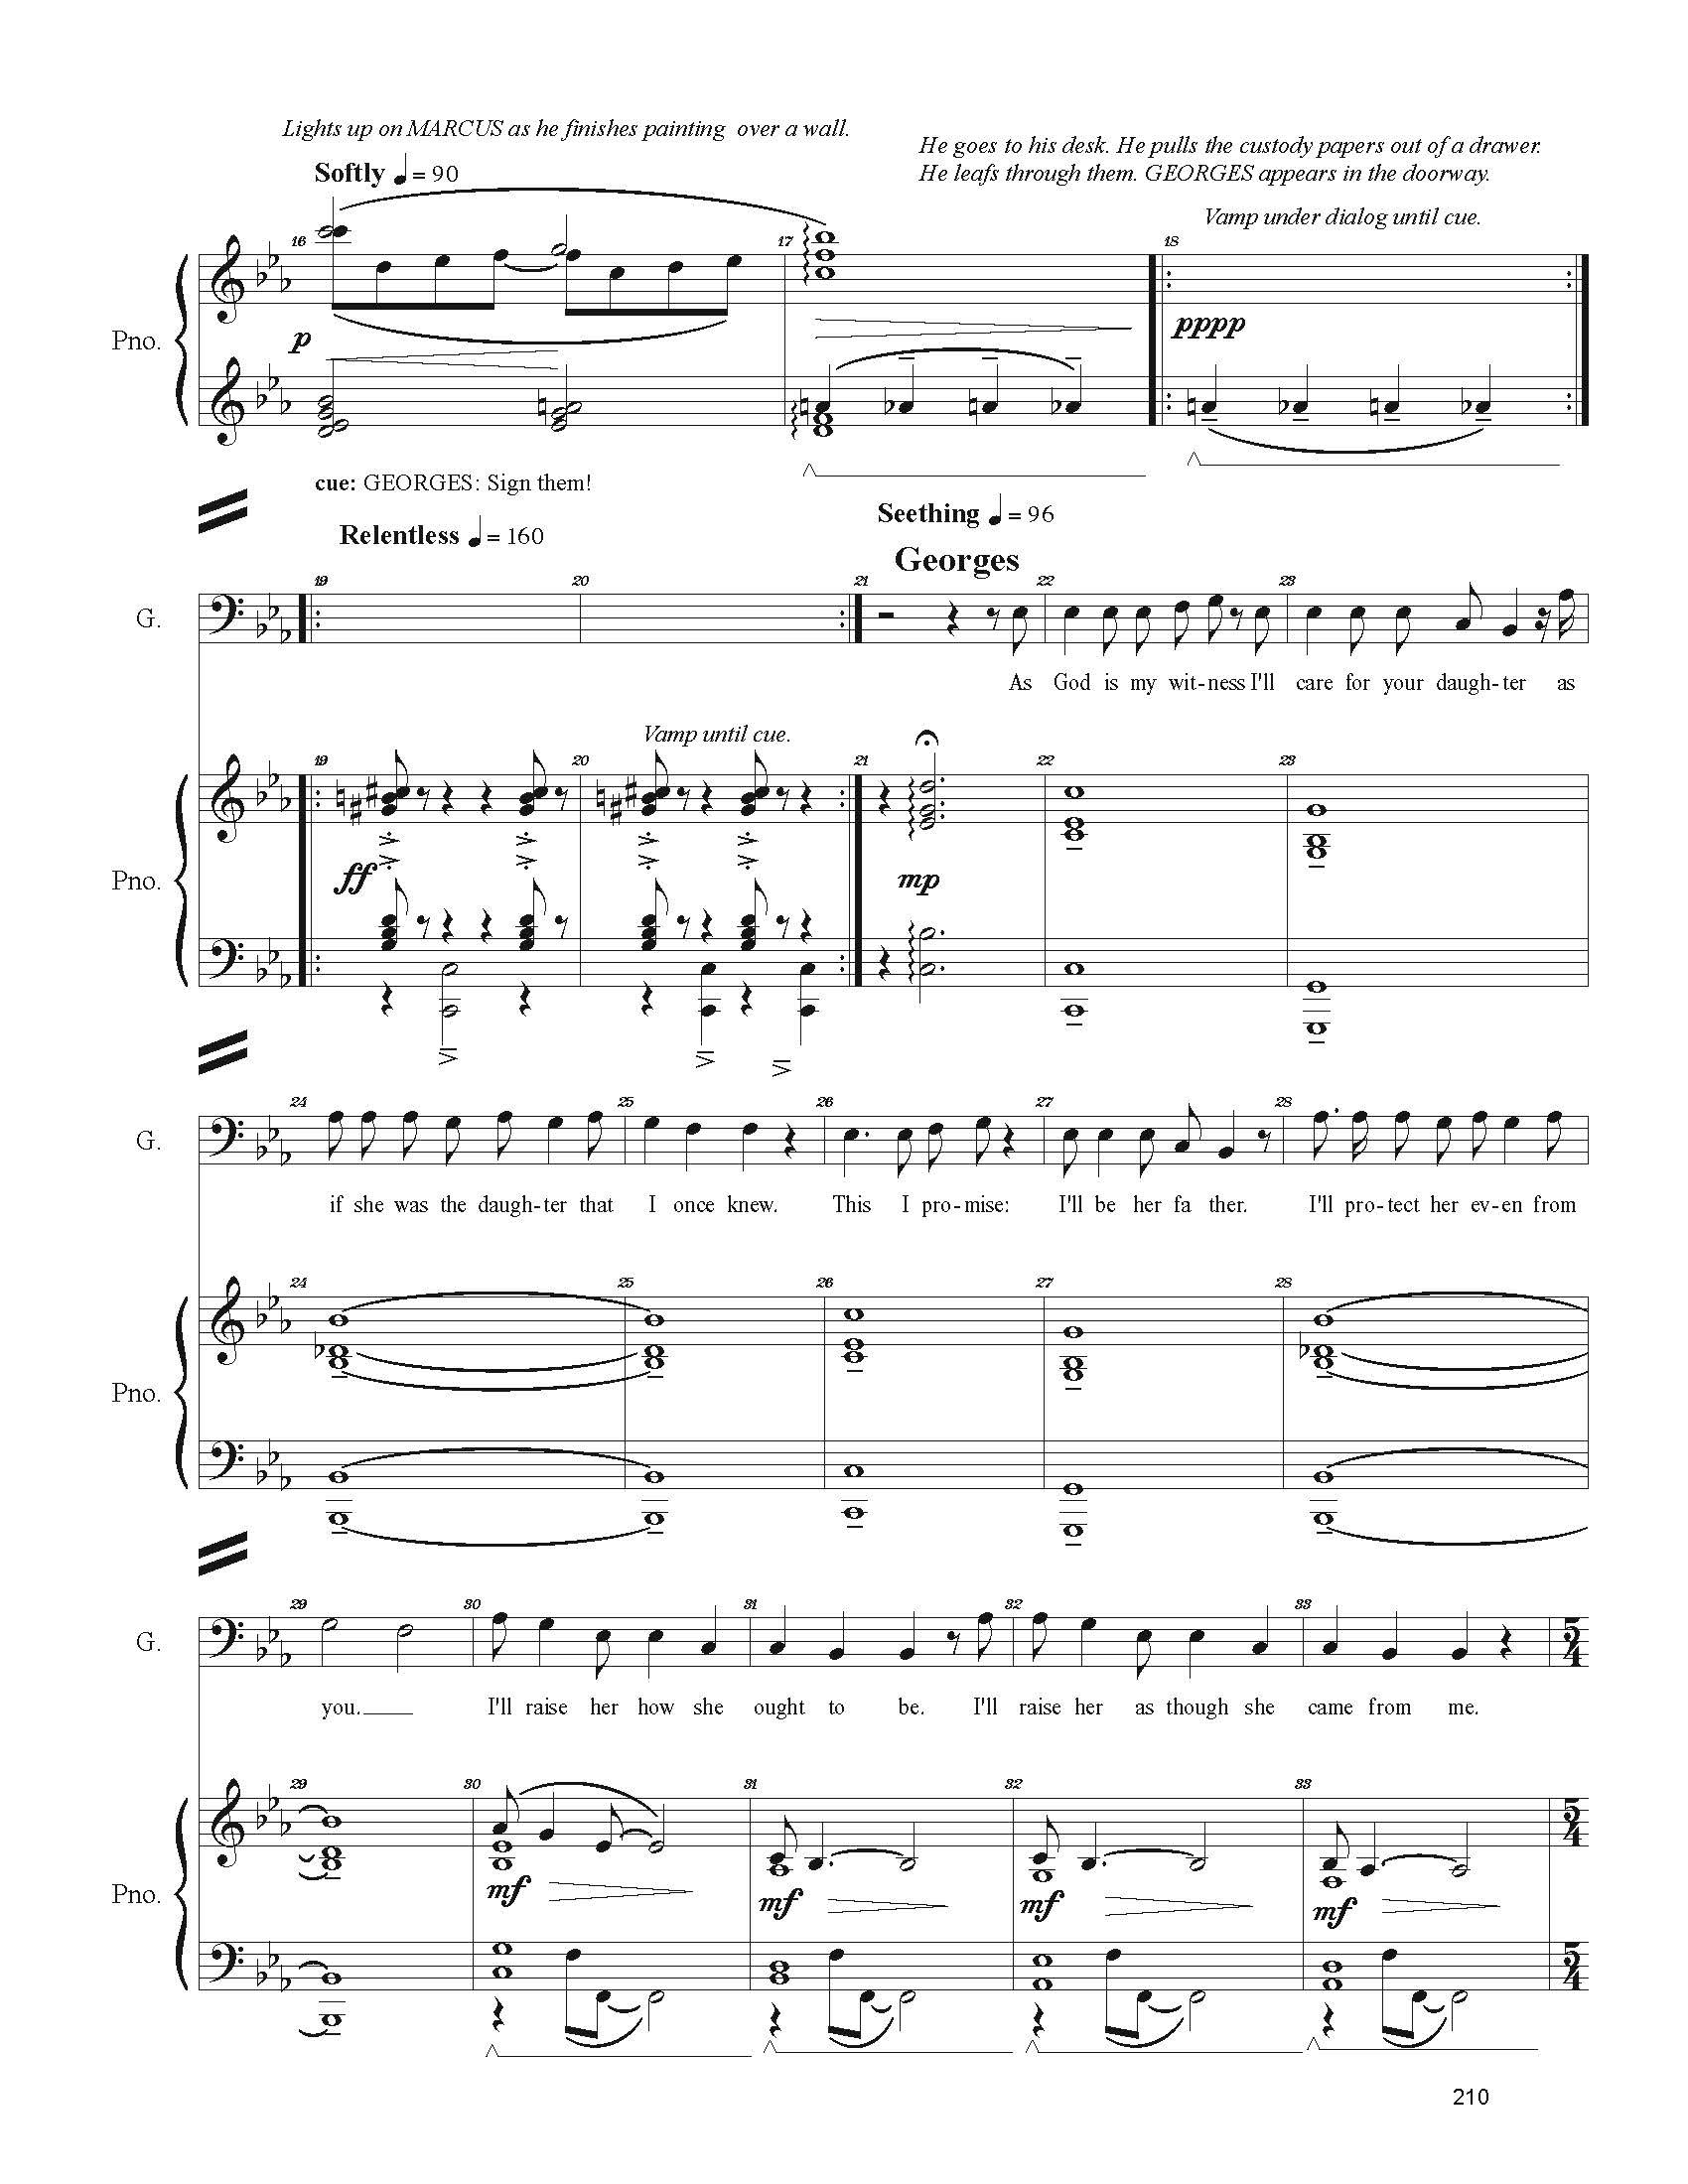 FULL PIANO VOCAL SCORE DRAFT 1 - Score_Page_210.jpg